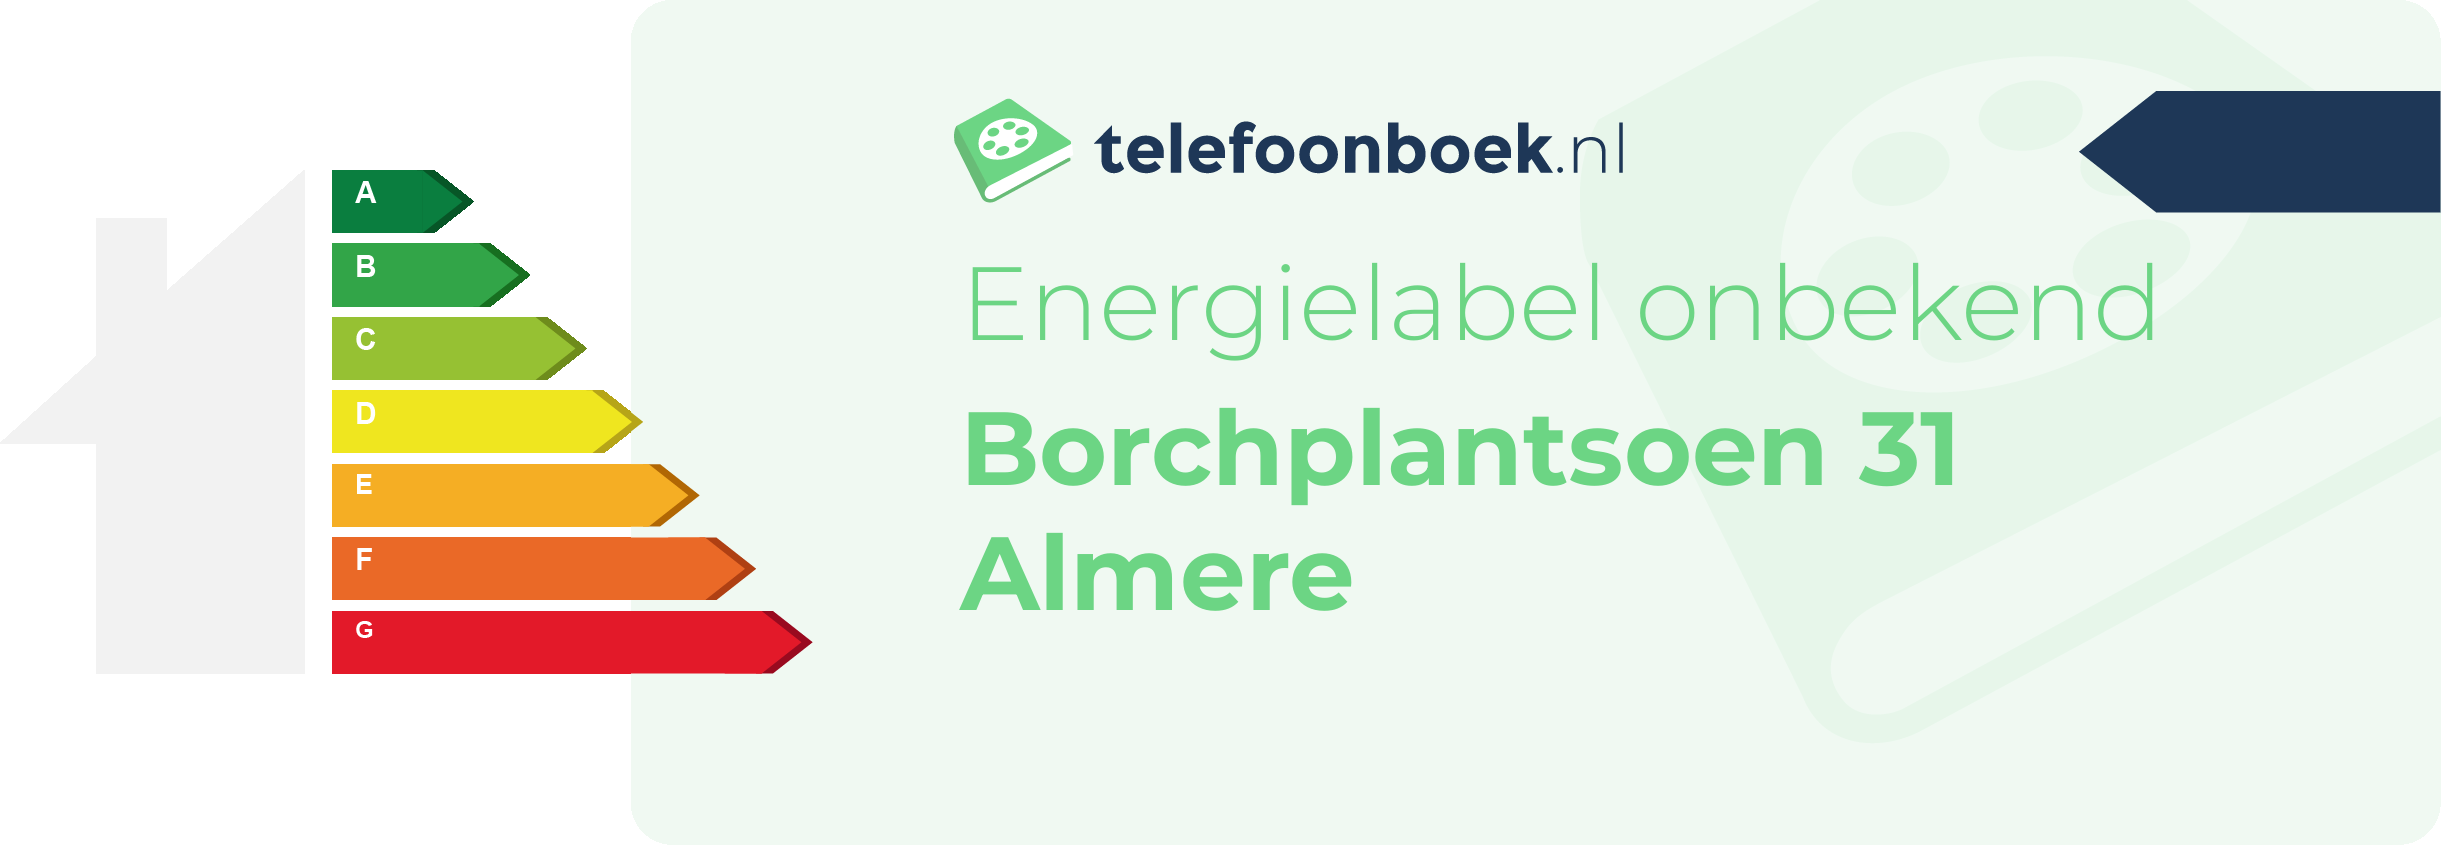 Energielabel Borchplantsoen 31 Almere